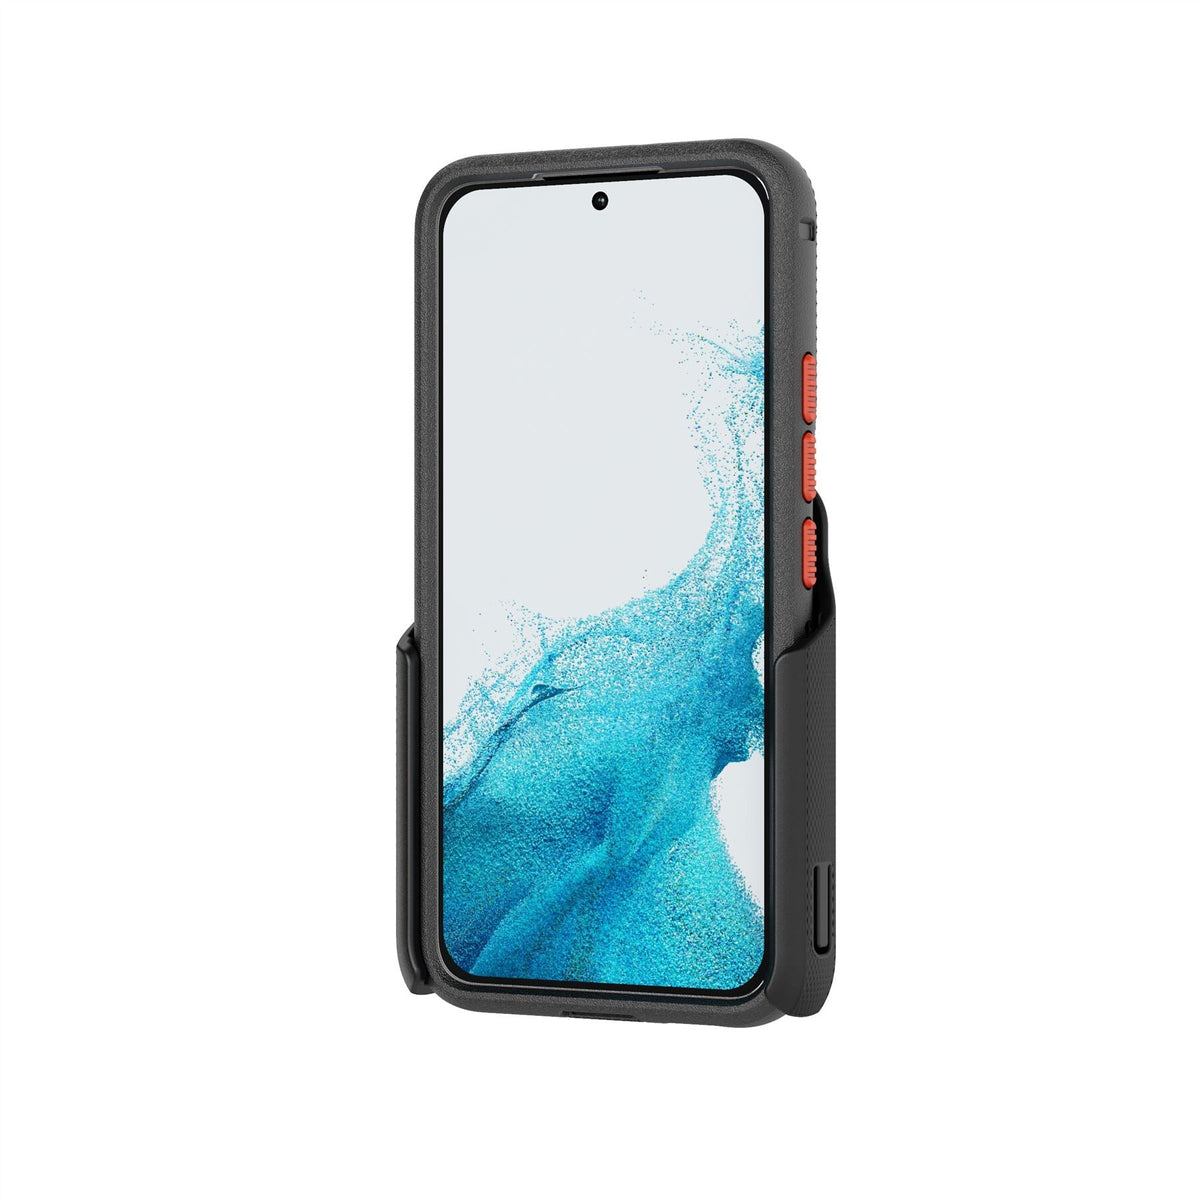 Tech21 Evo Max mobile phone case for Galaxy S22 in Black